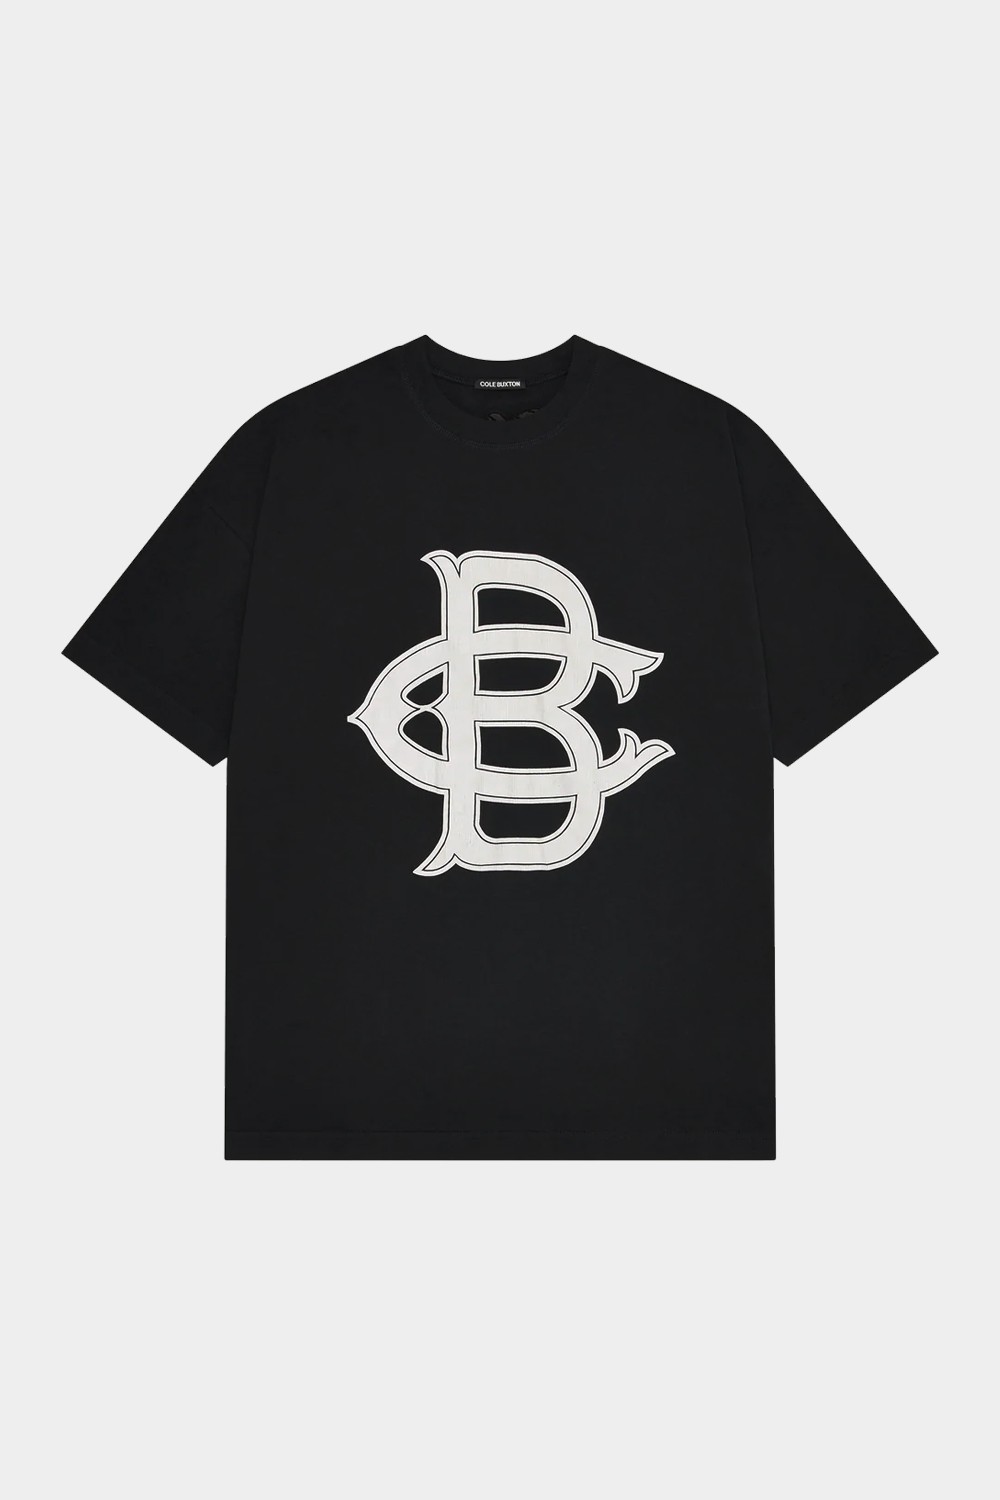 C.B. Oversized Baseball T Shirt Black (CLBXT13)